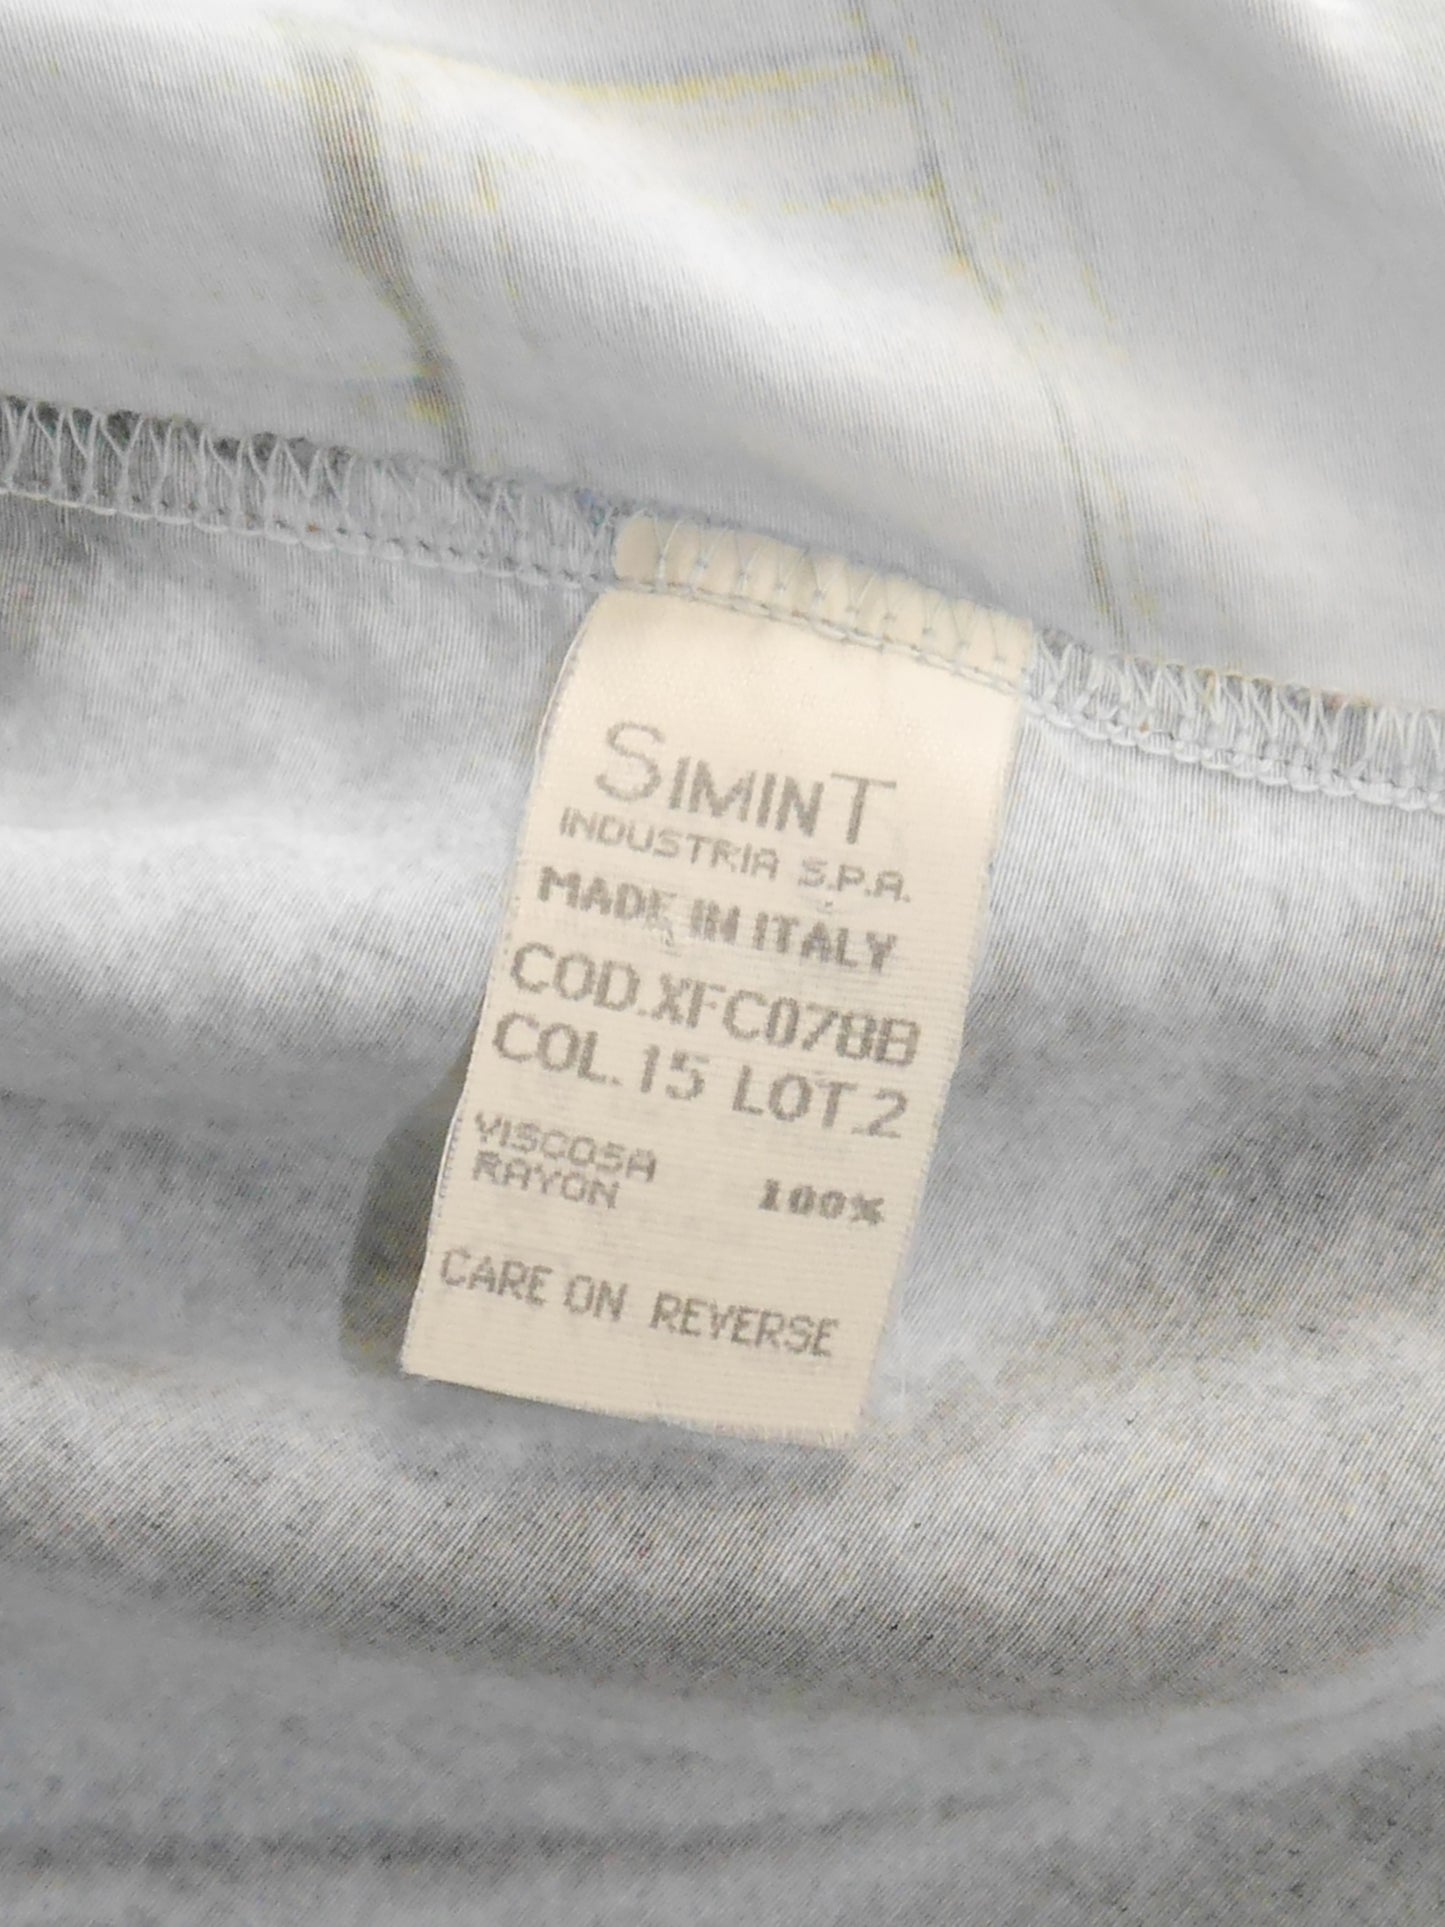 MOSCHINO Jeans 1980s 1990s Vintage Trompe l'Oeil "Denim" Oversized Shirt Size L One-Size